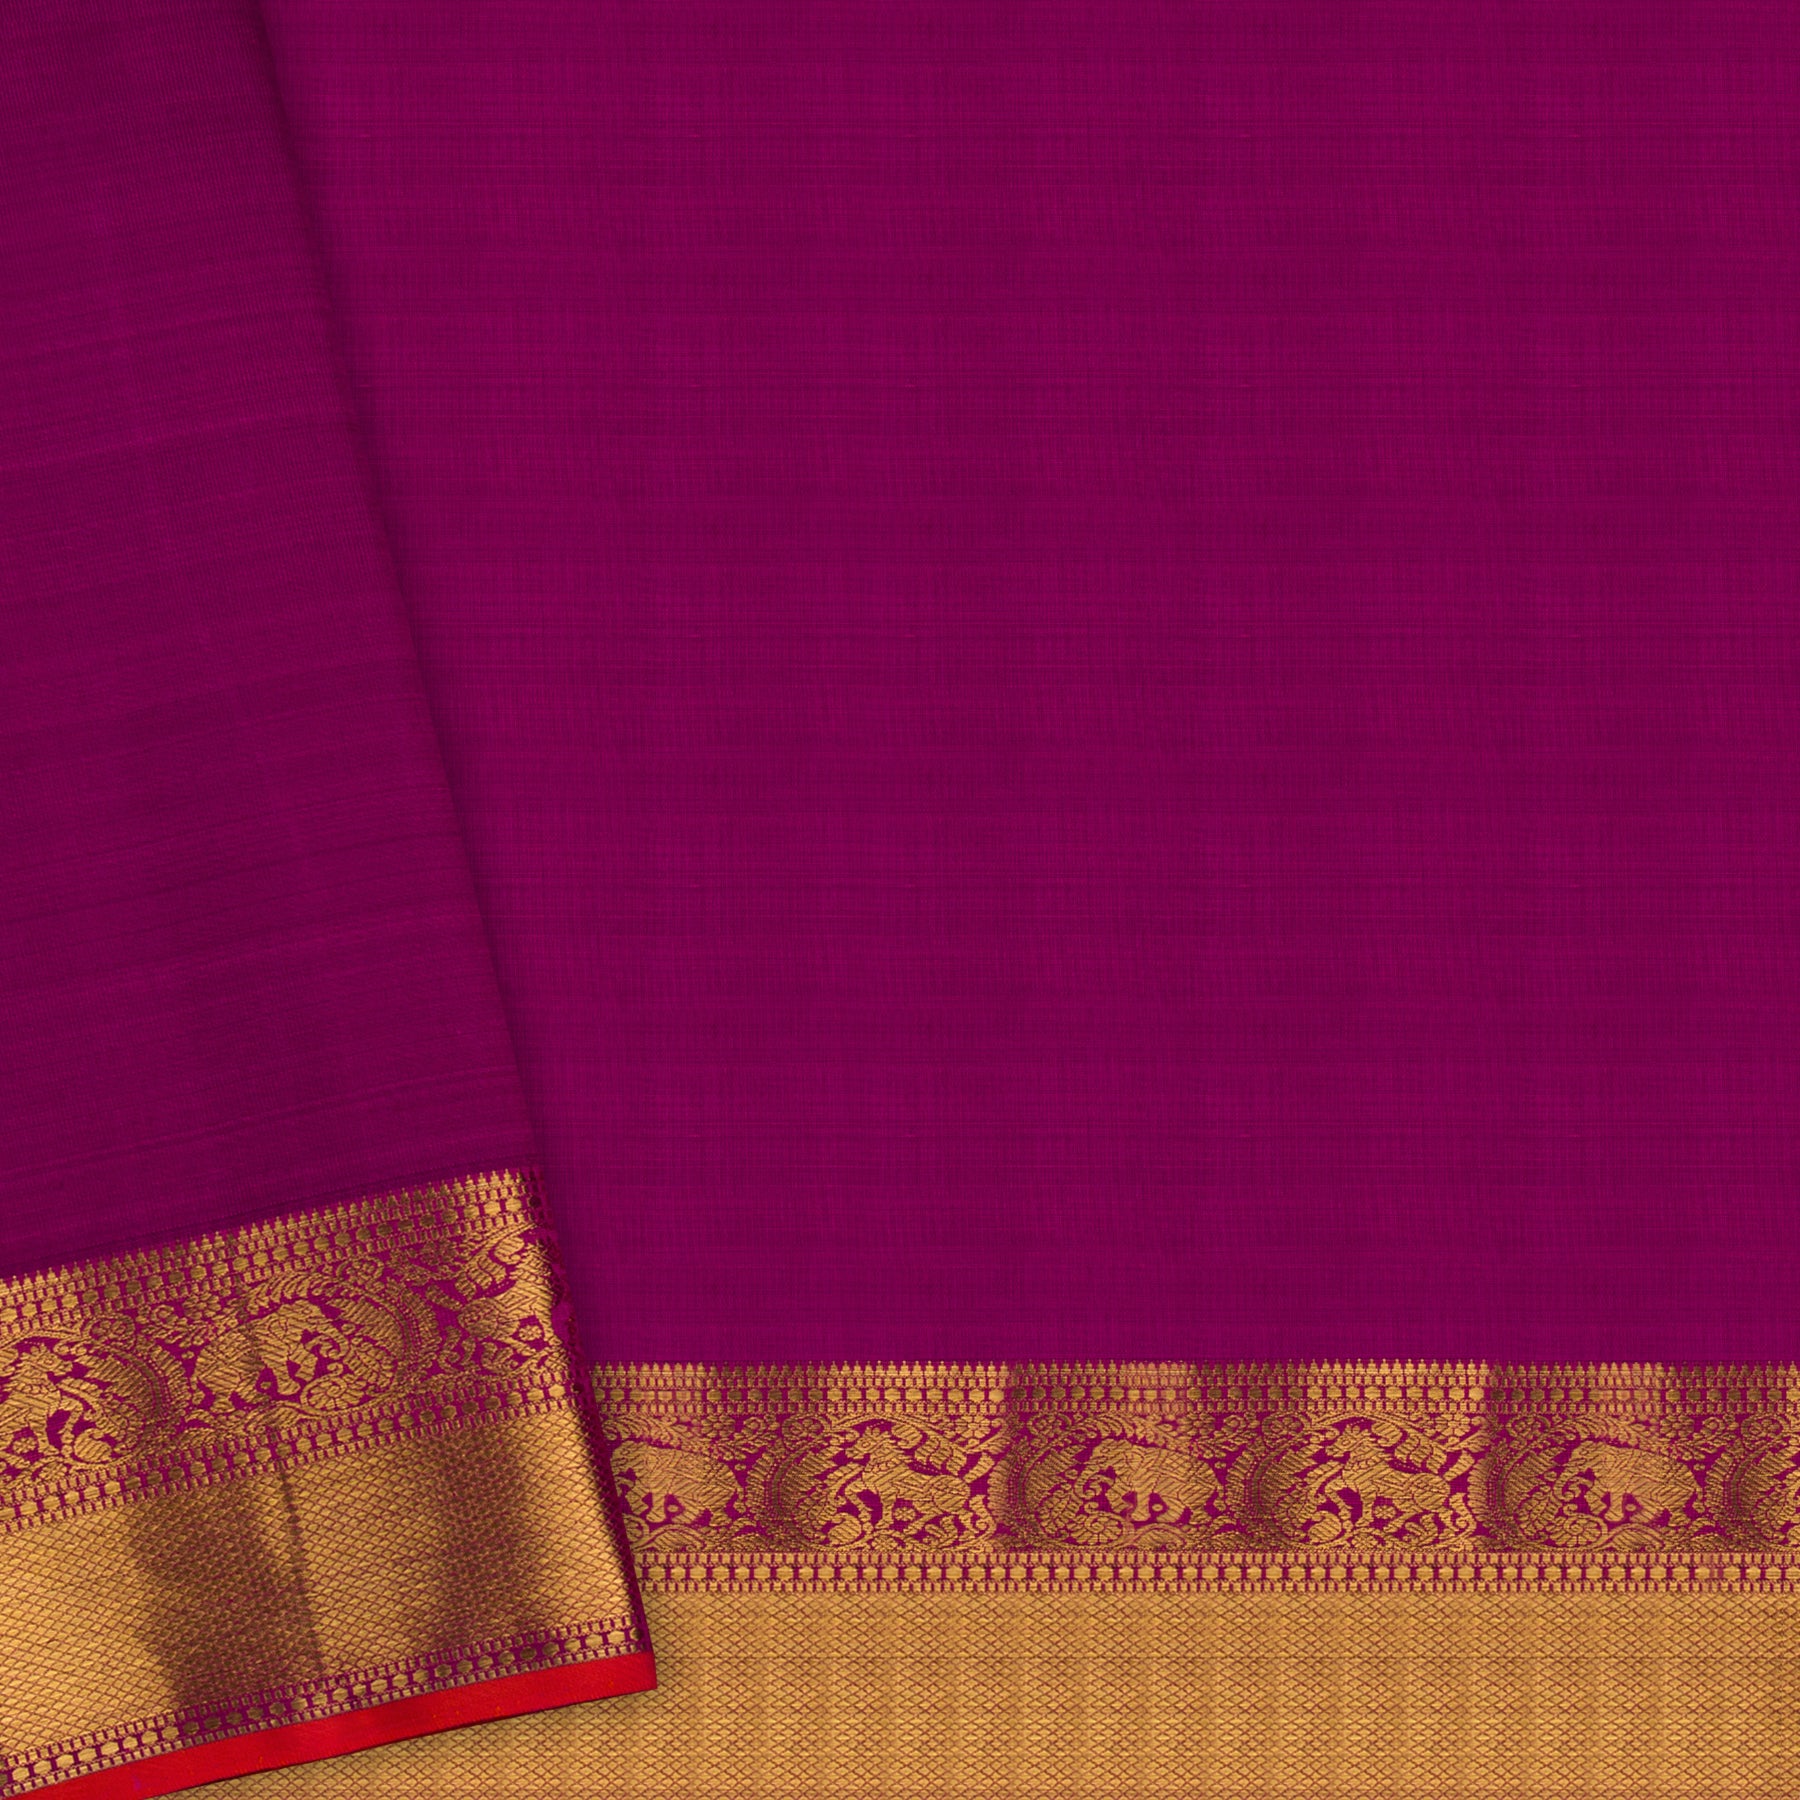 Kanakavalli Kanjivaram Silk Sari 23-110-HS001-11602 - Blouse View